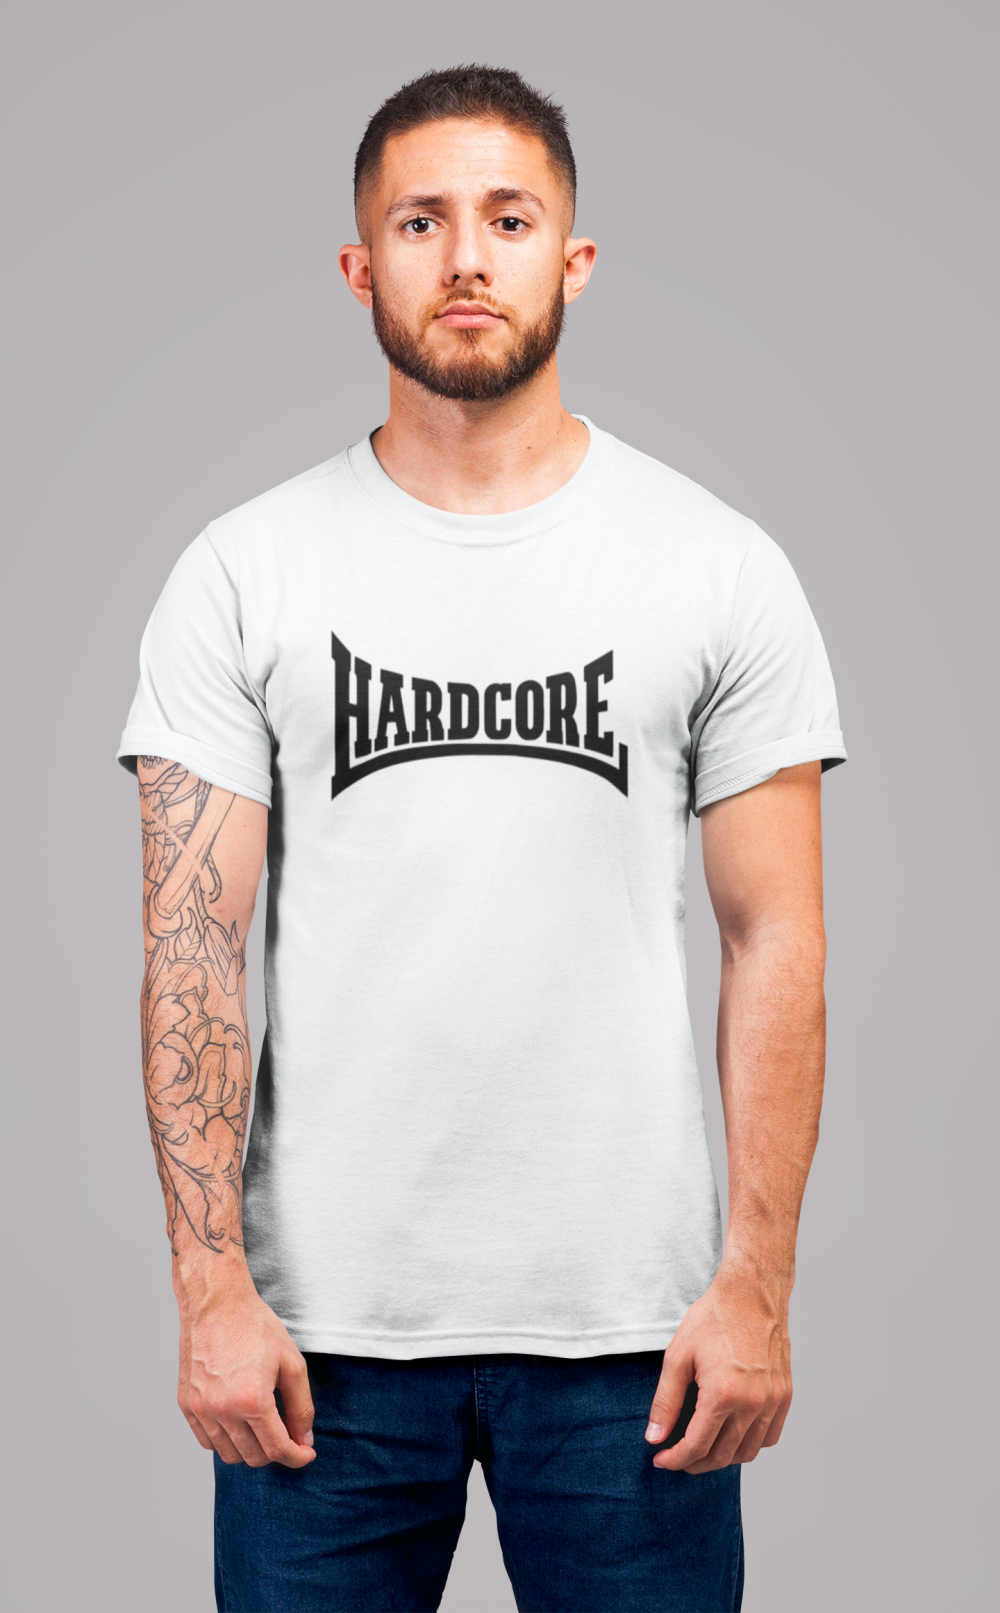 Hardcore t shirt